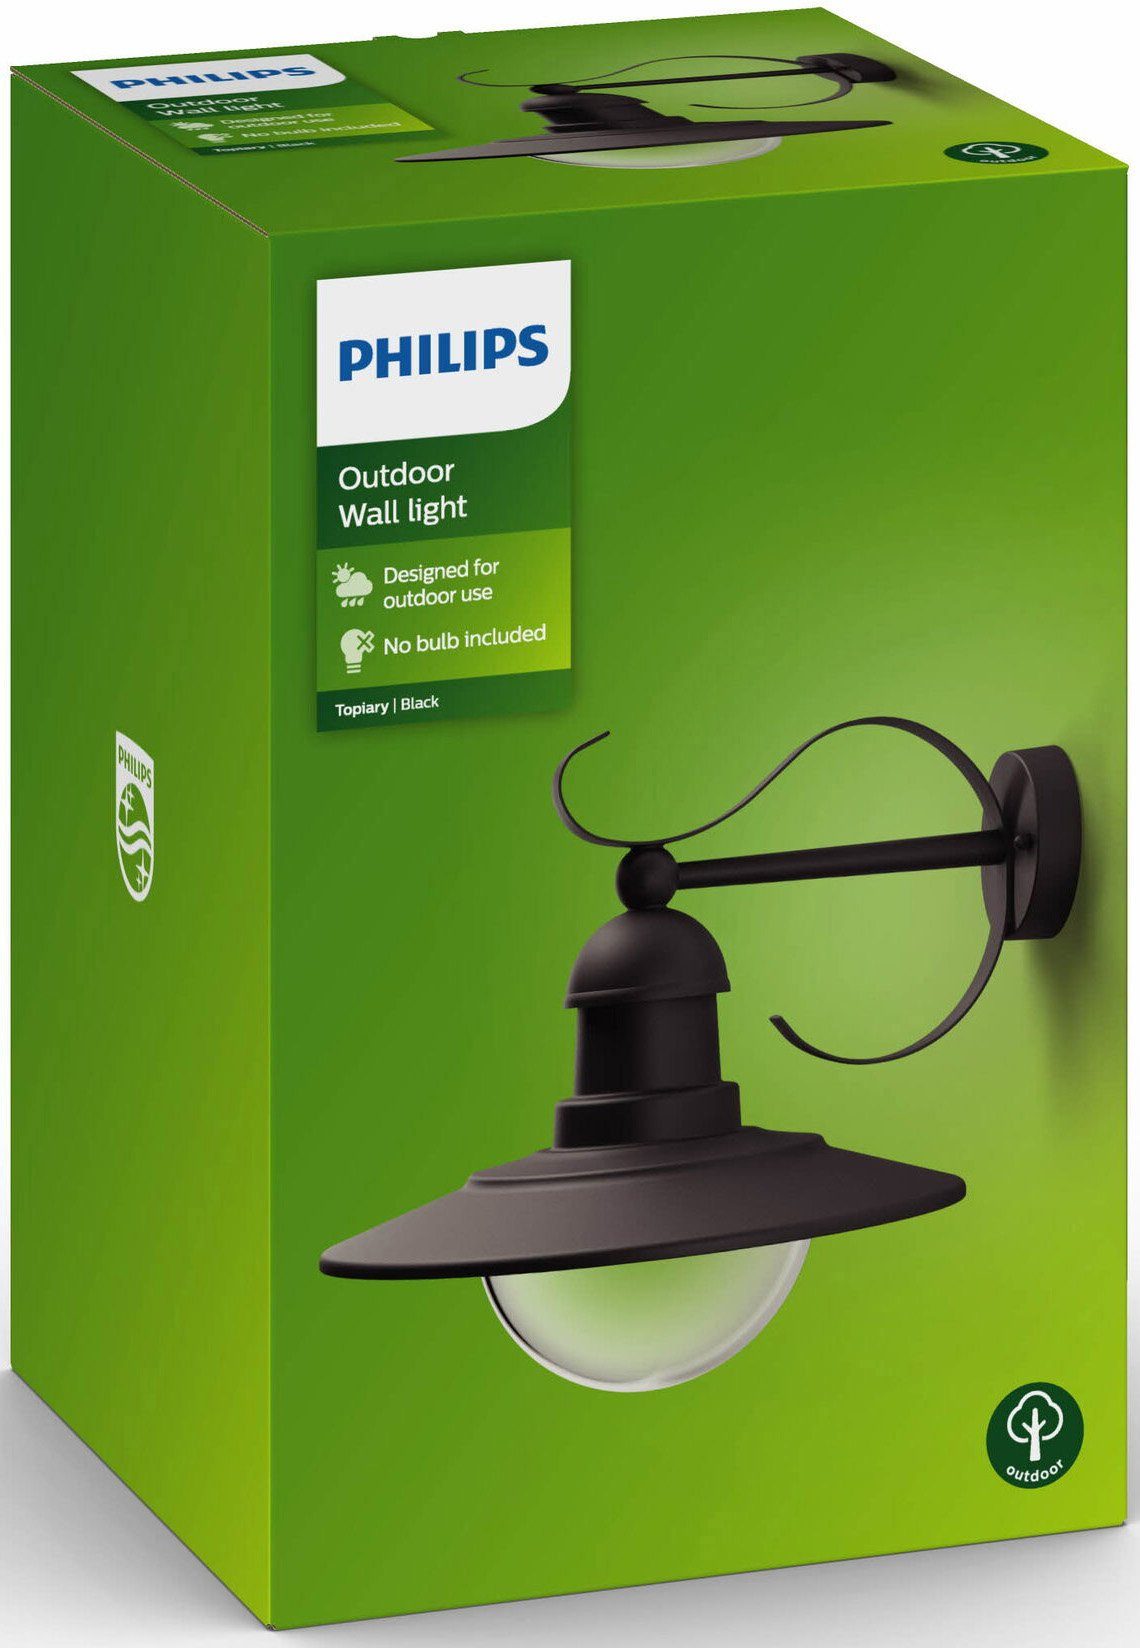 LM LED exkl 1x60W Wandleuchte Wandleuchte Philips Schwarz wechselbar, Topiary, BE